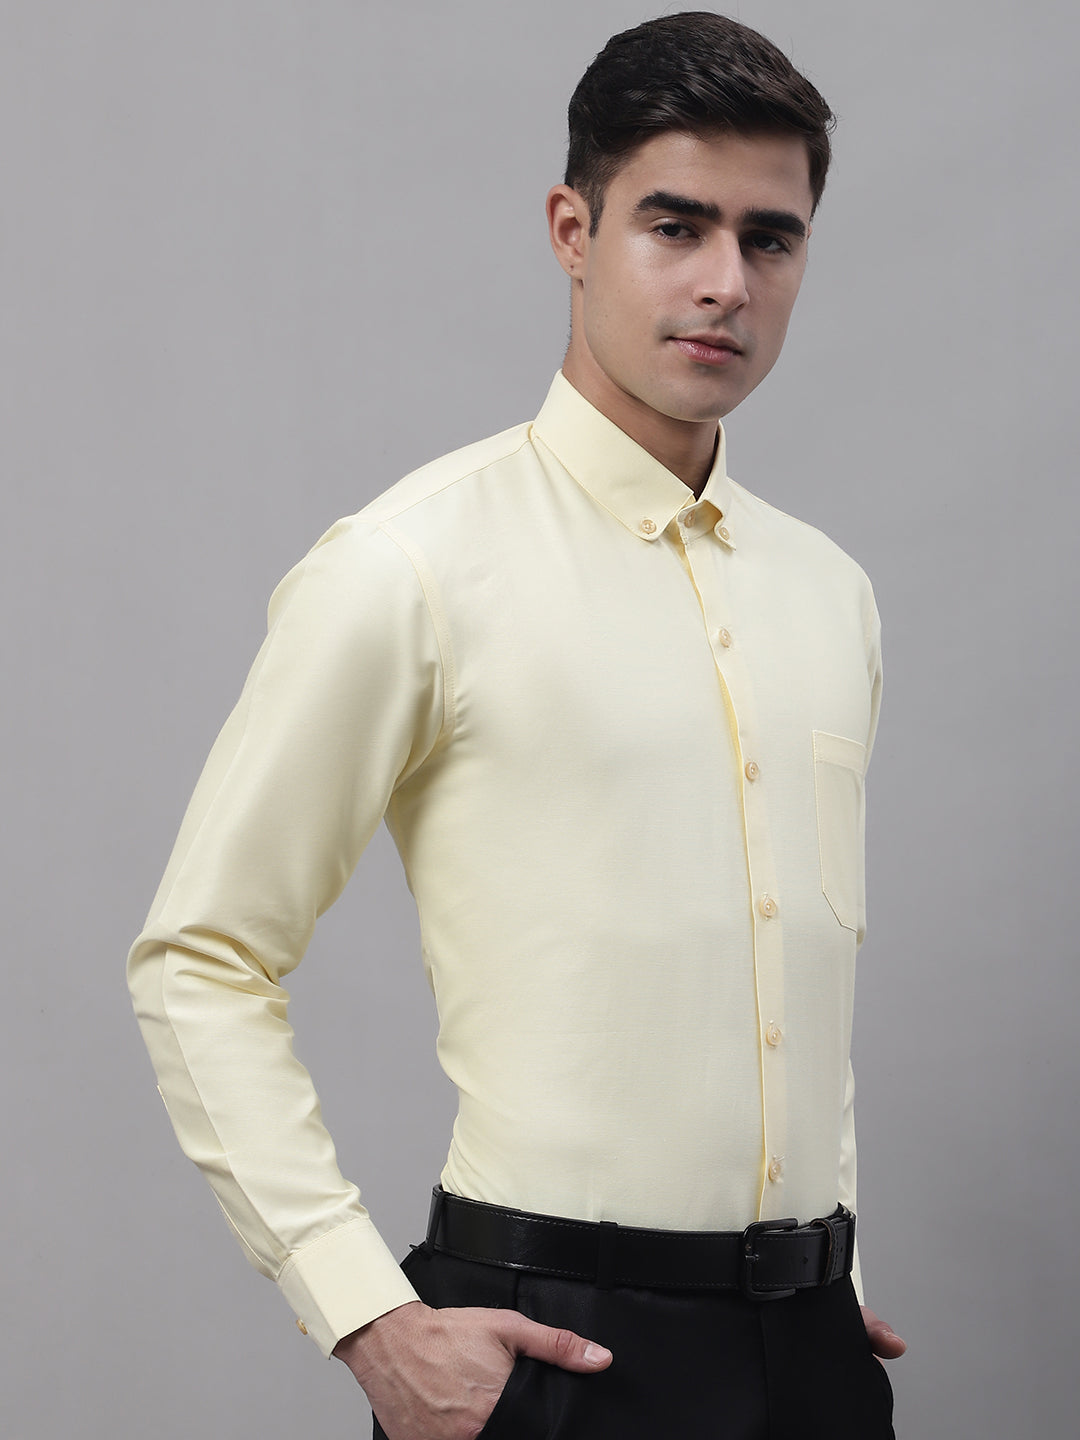 Men's Lemon Cotton Solid Formal Shirt